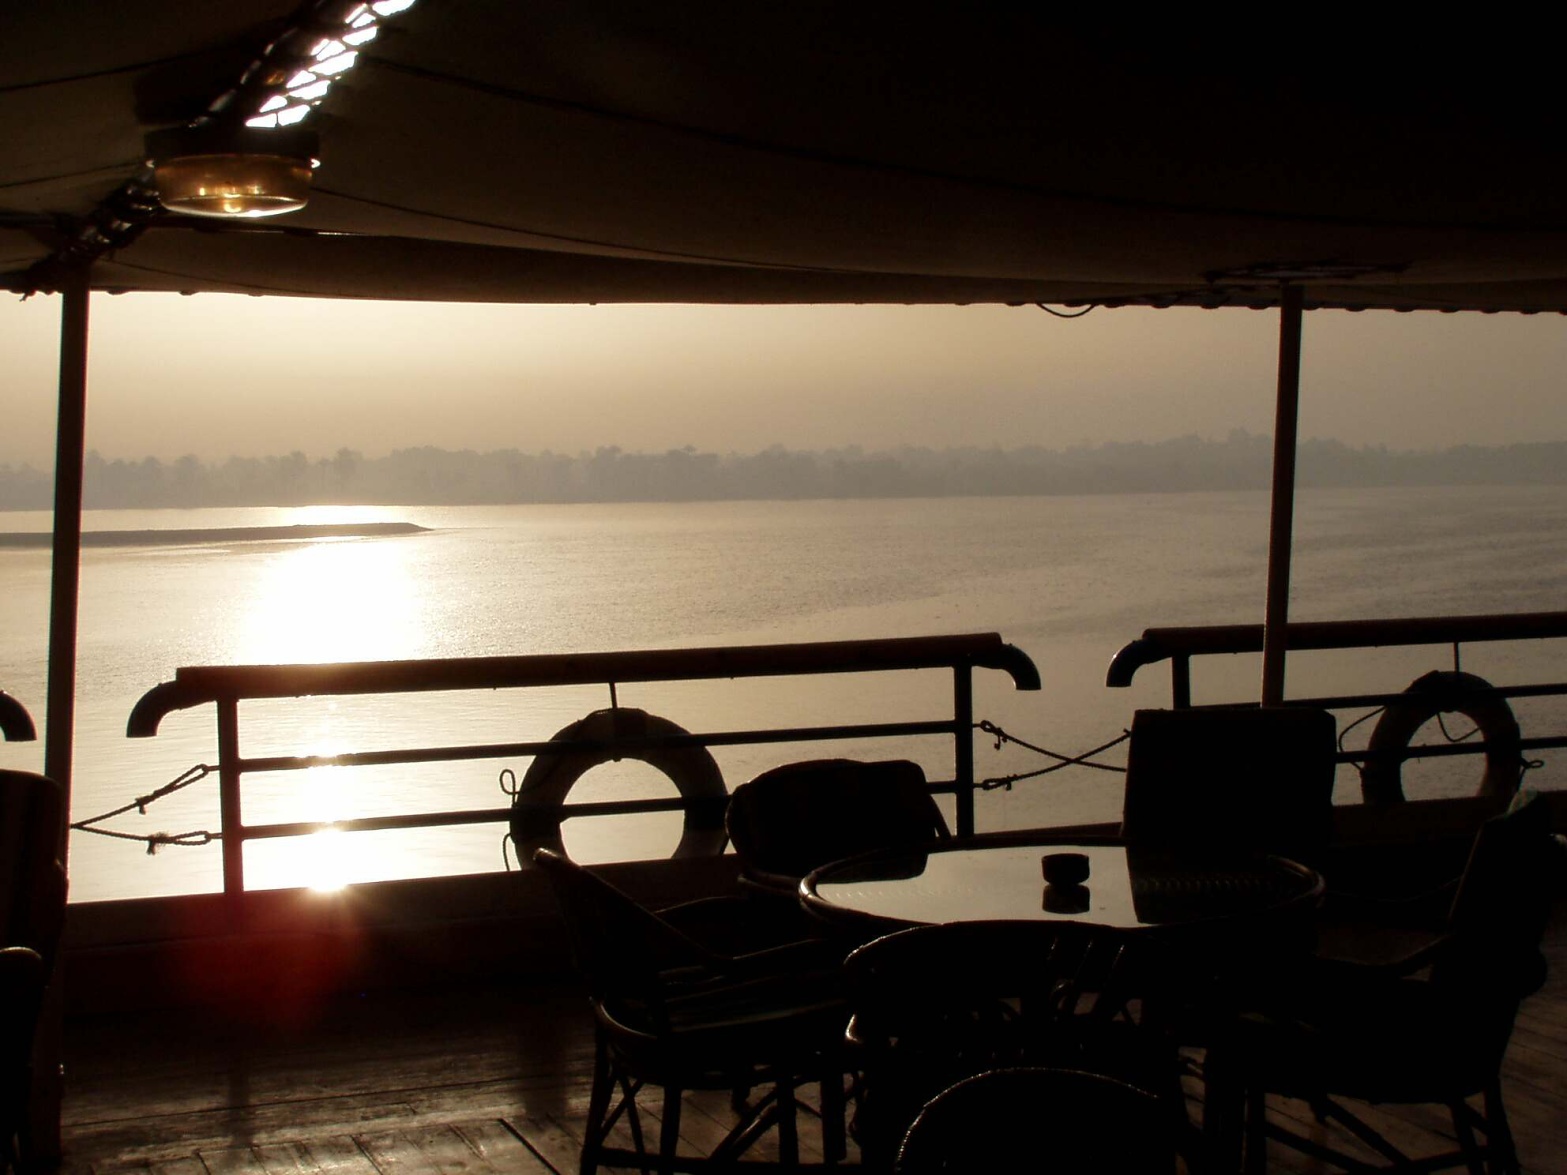 Západ slunce na Nilu